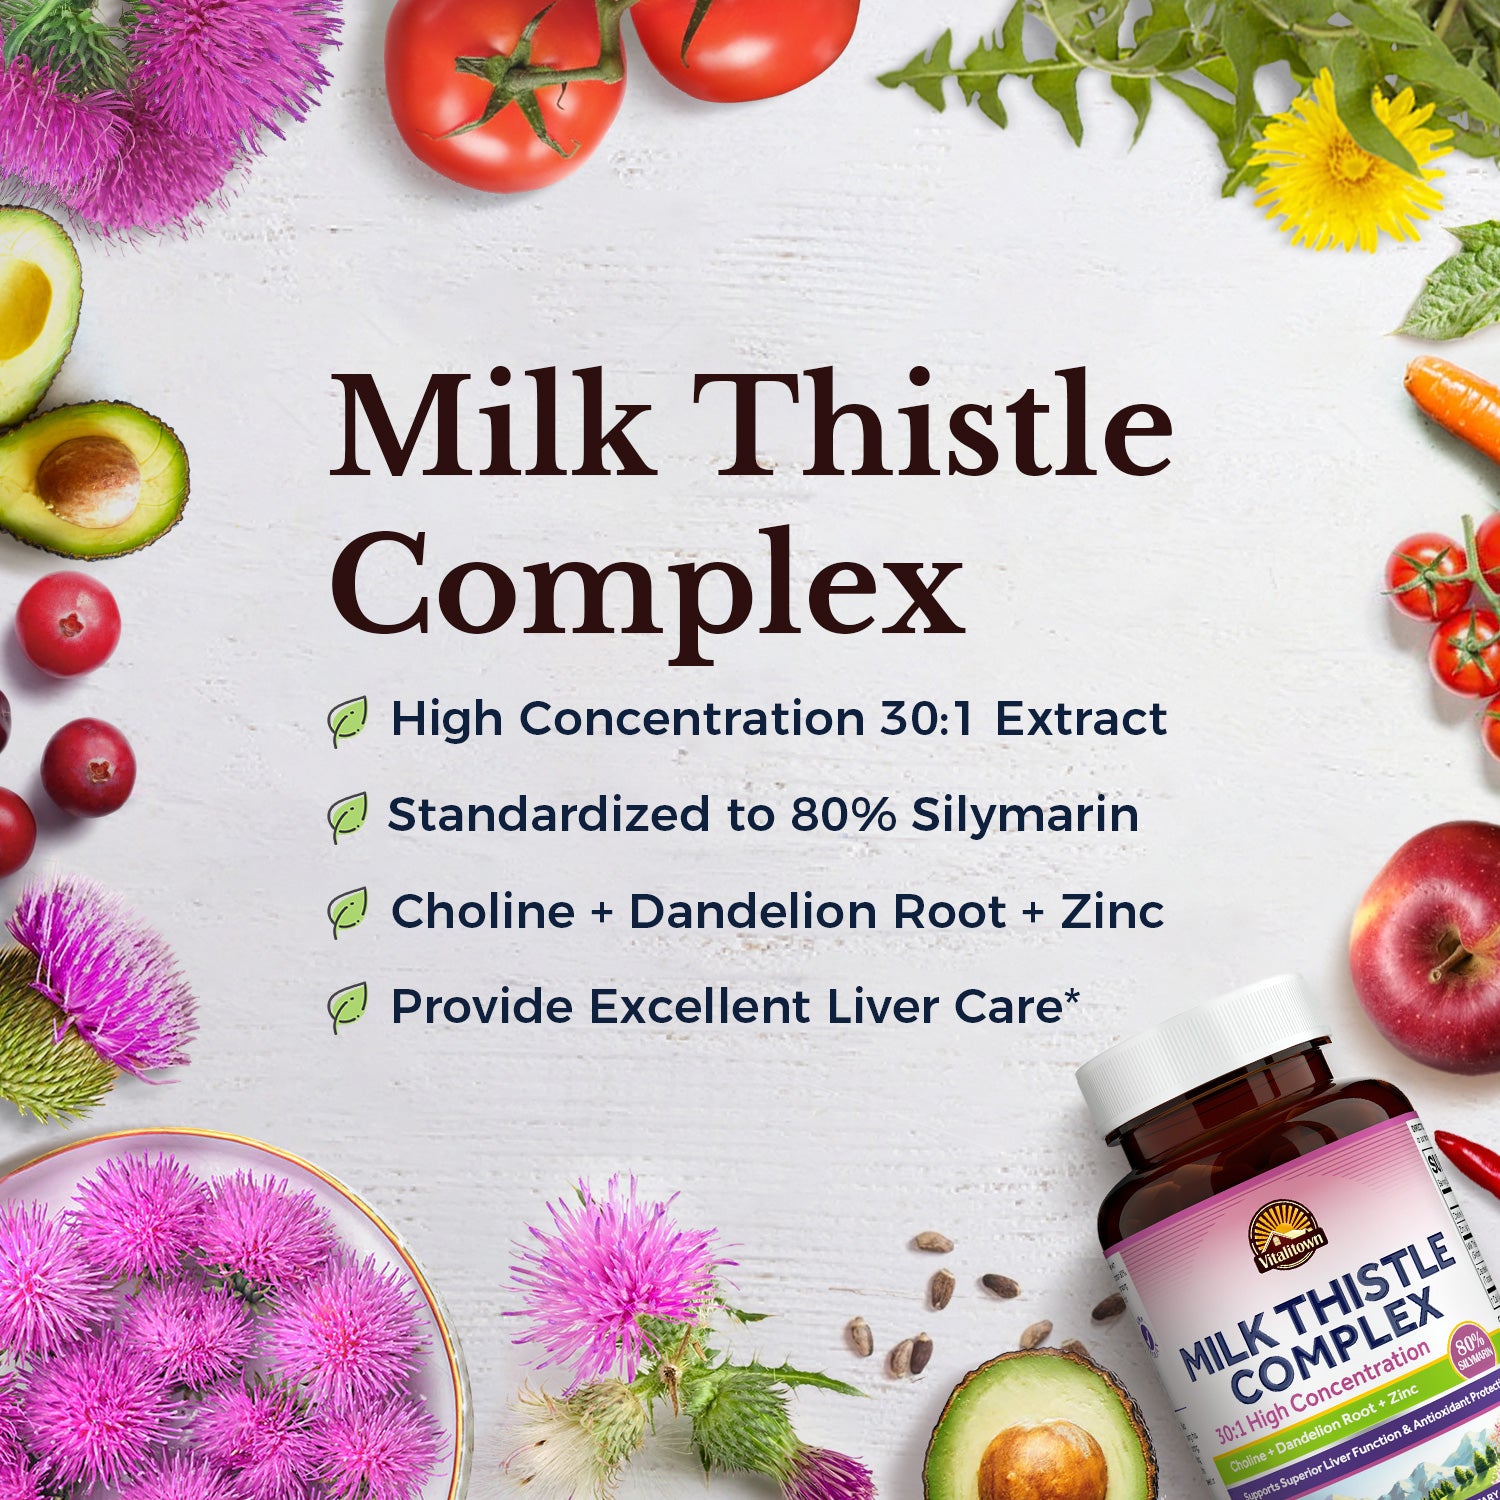 Milk Thistle Complex